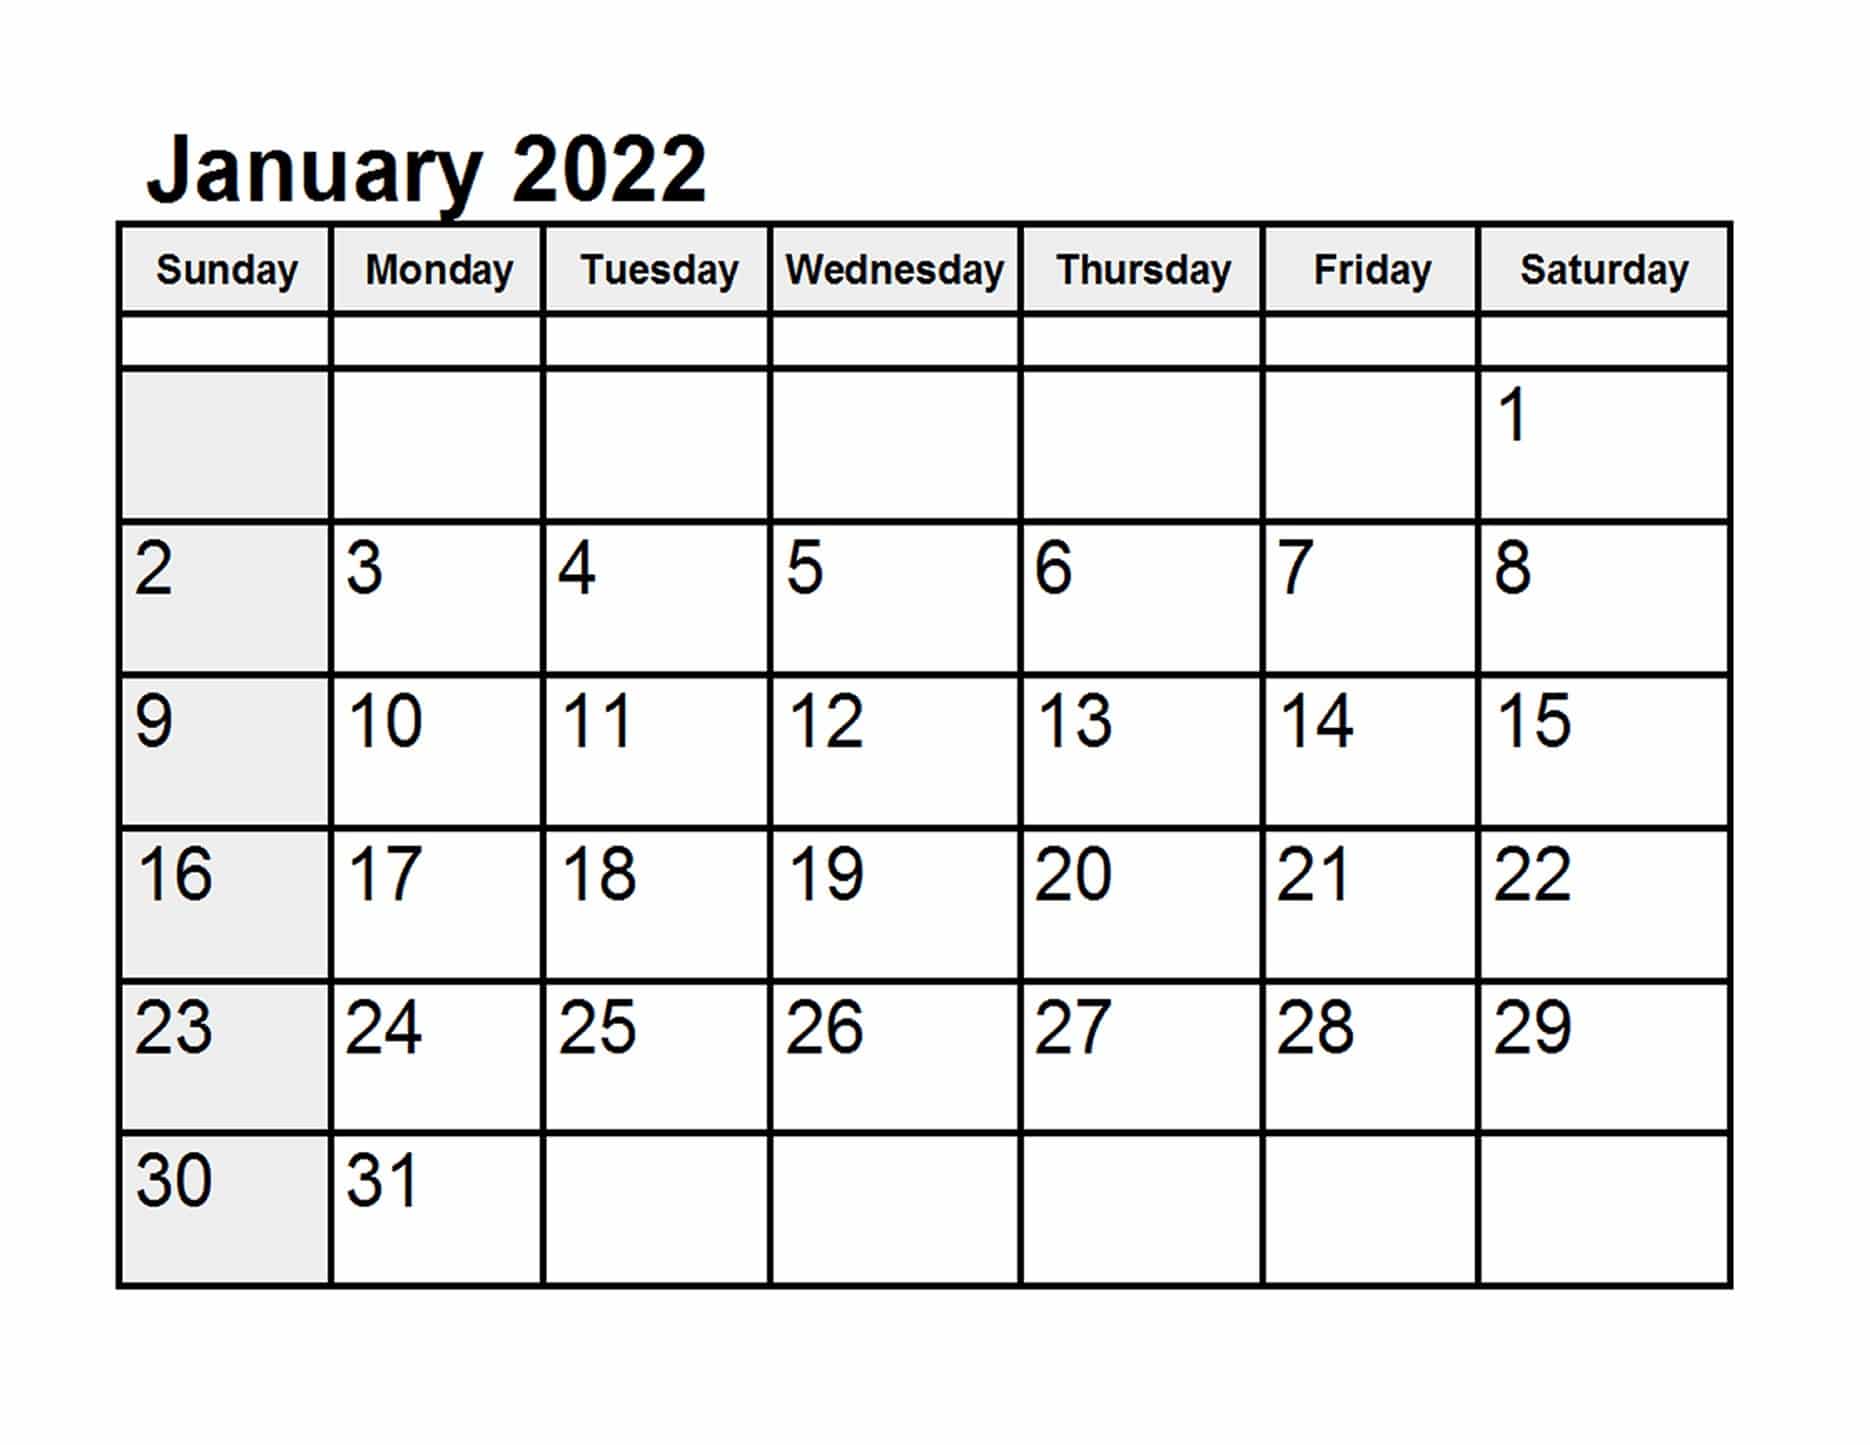 Disney Crowd Calendar January 2022